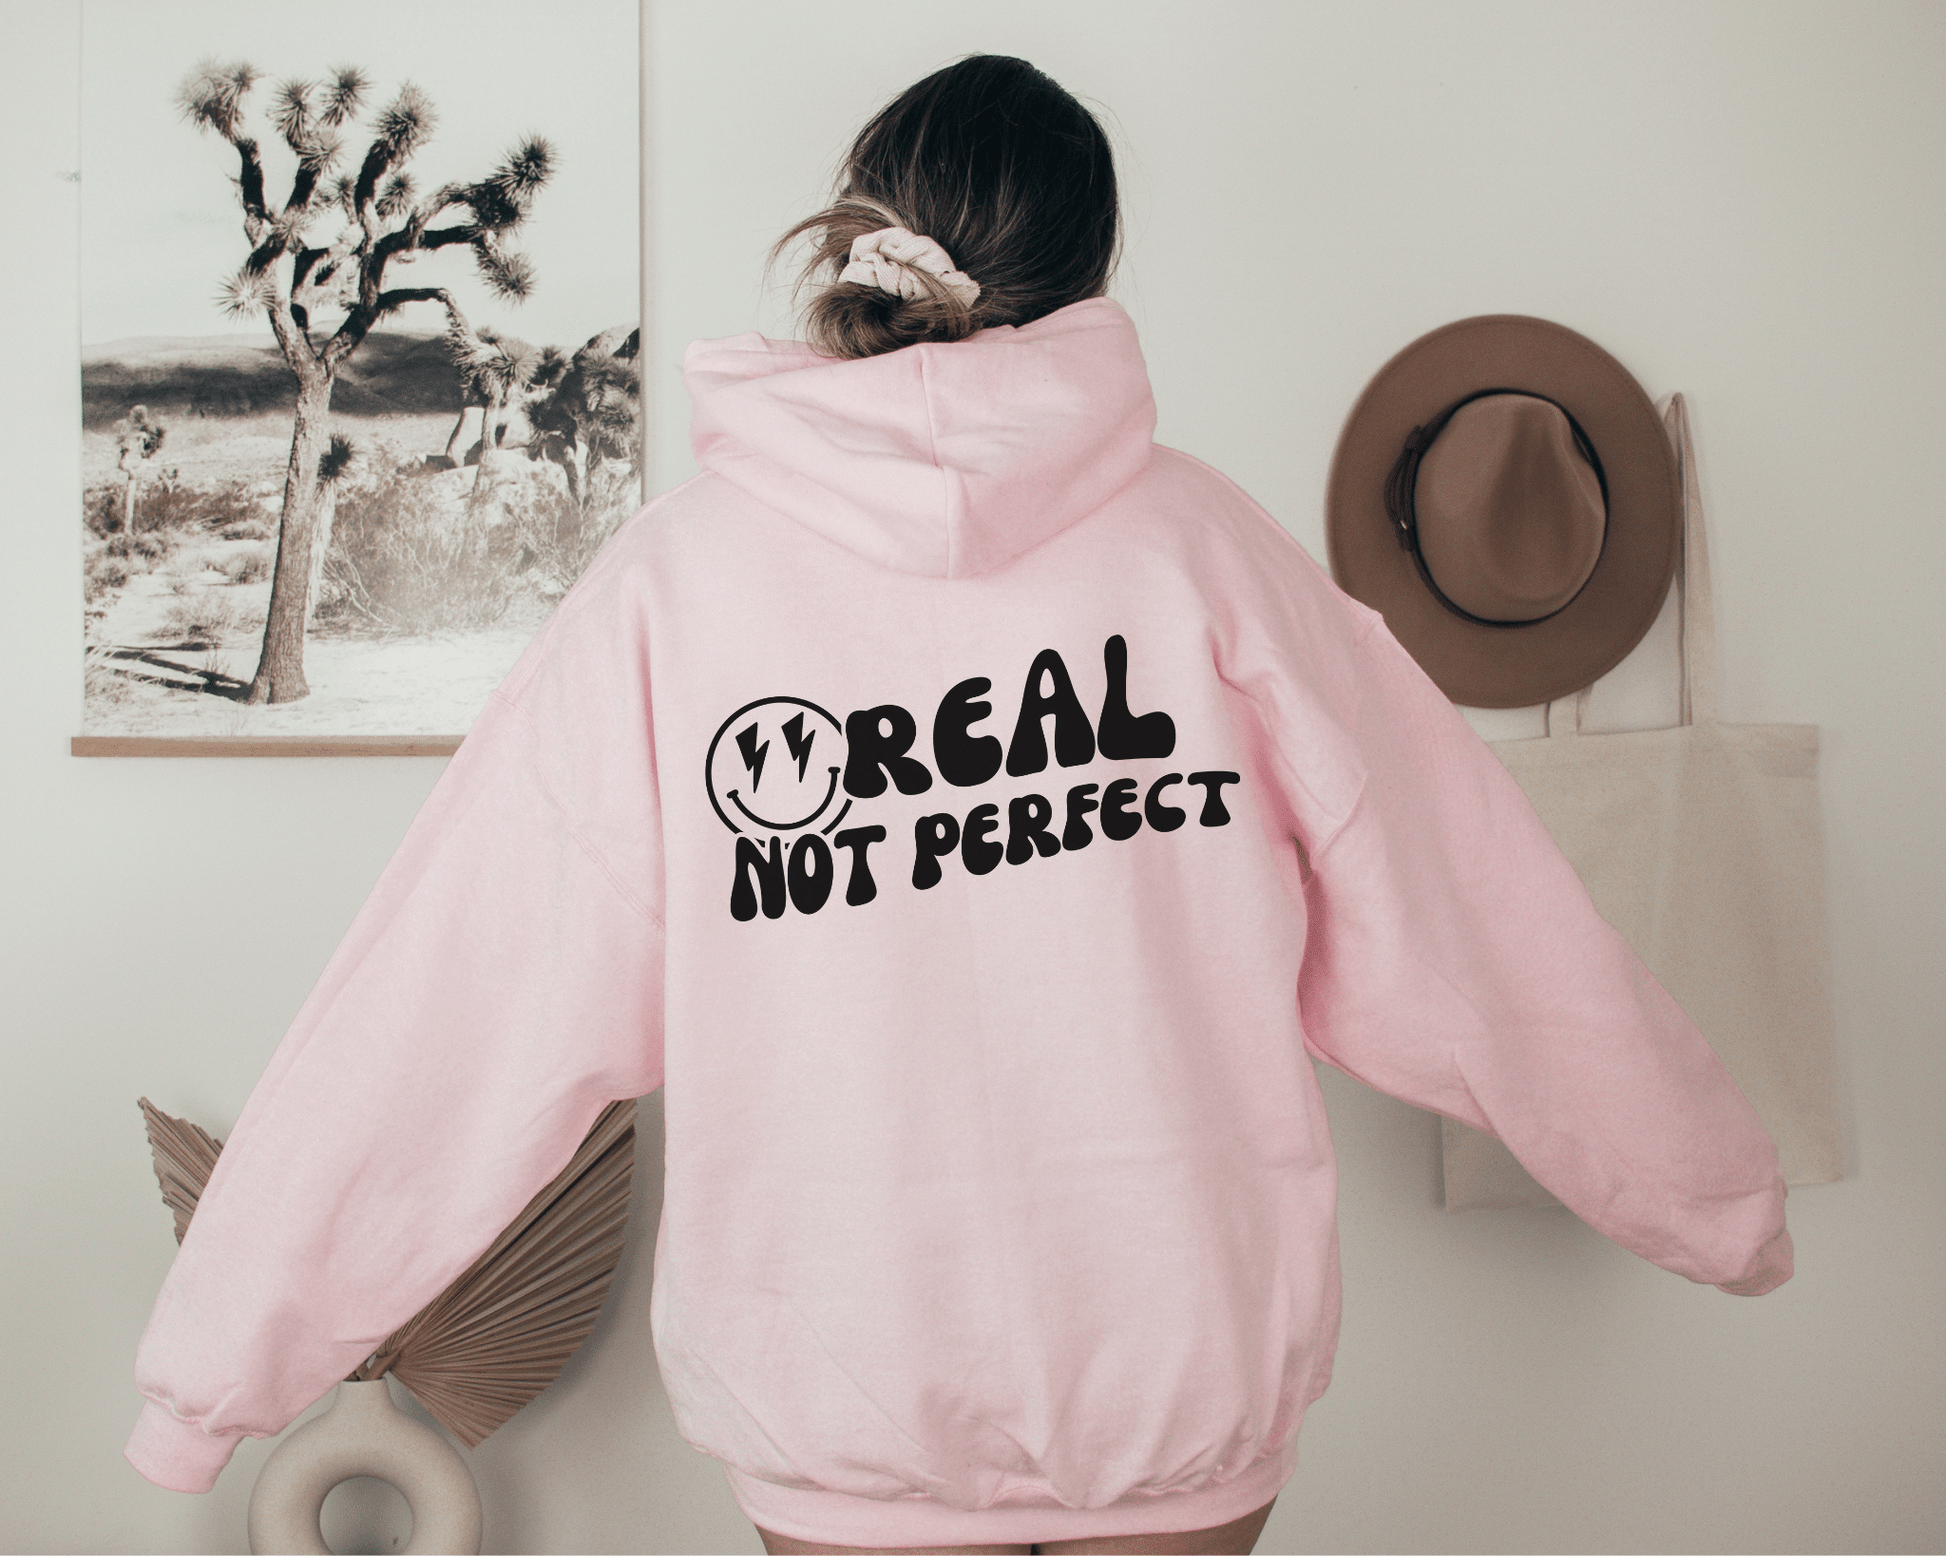 Real Not Perfect Hoodie in Pink, back of hoodie.